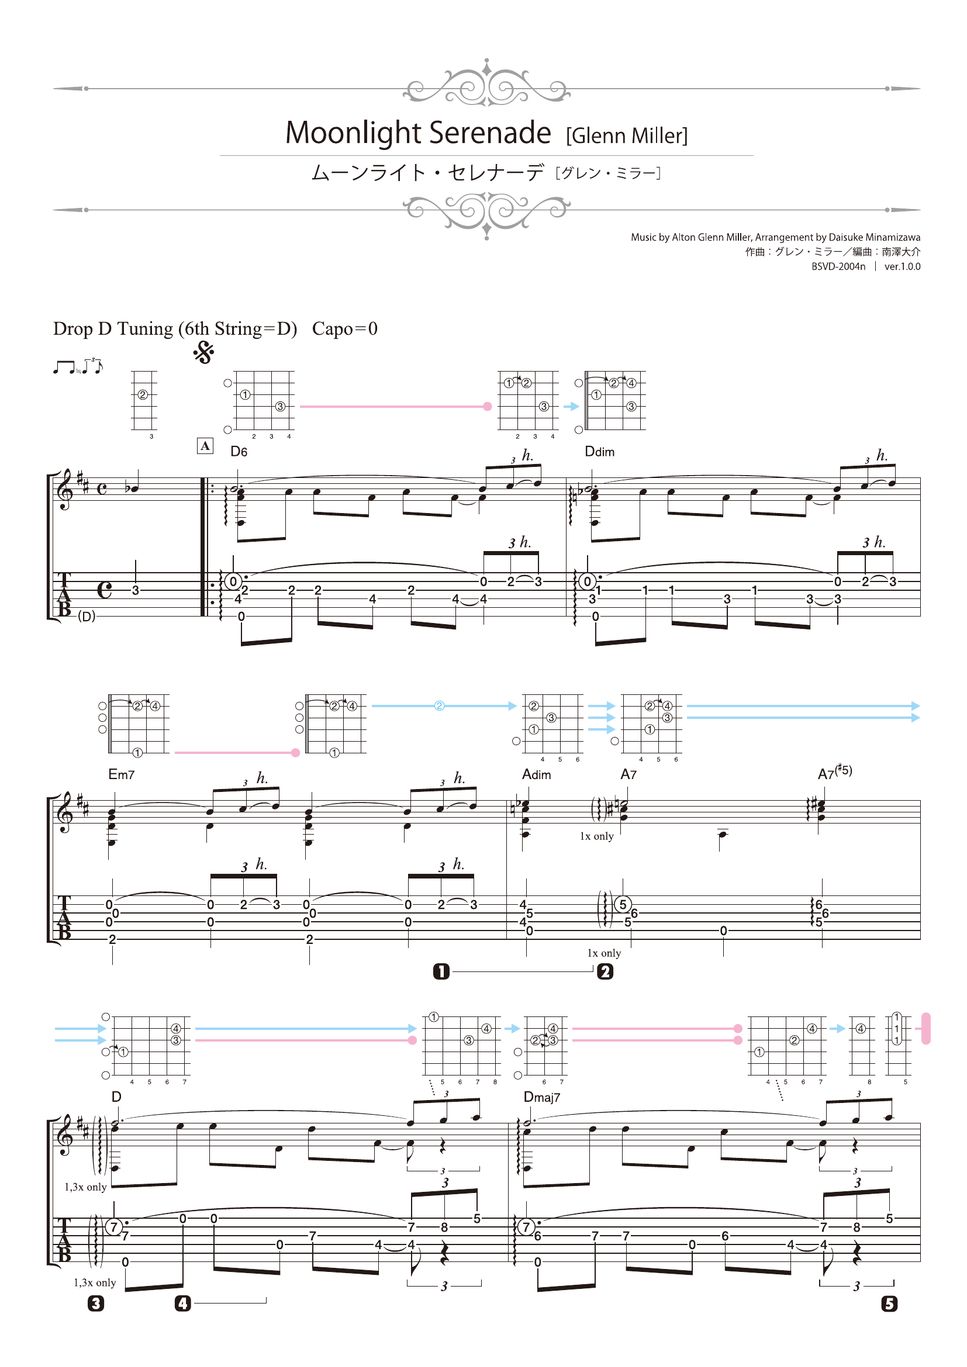 Glenn Miller - Moonlight Serenade (Solo Guitar) by Daisuke Minamizawa